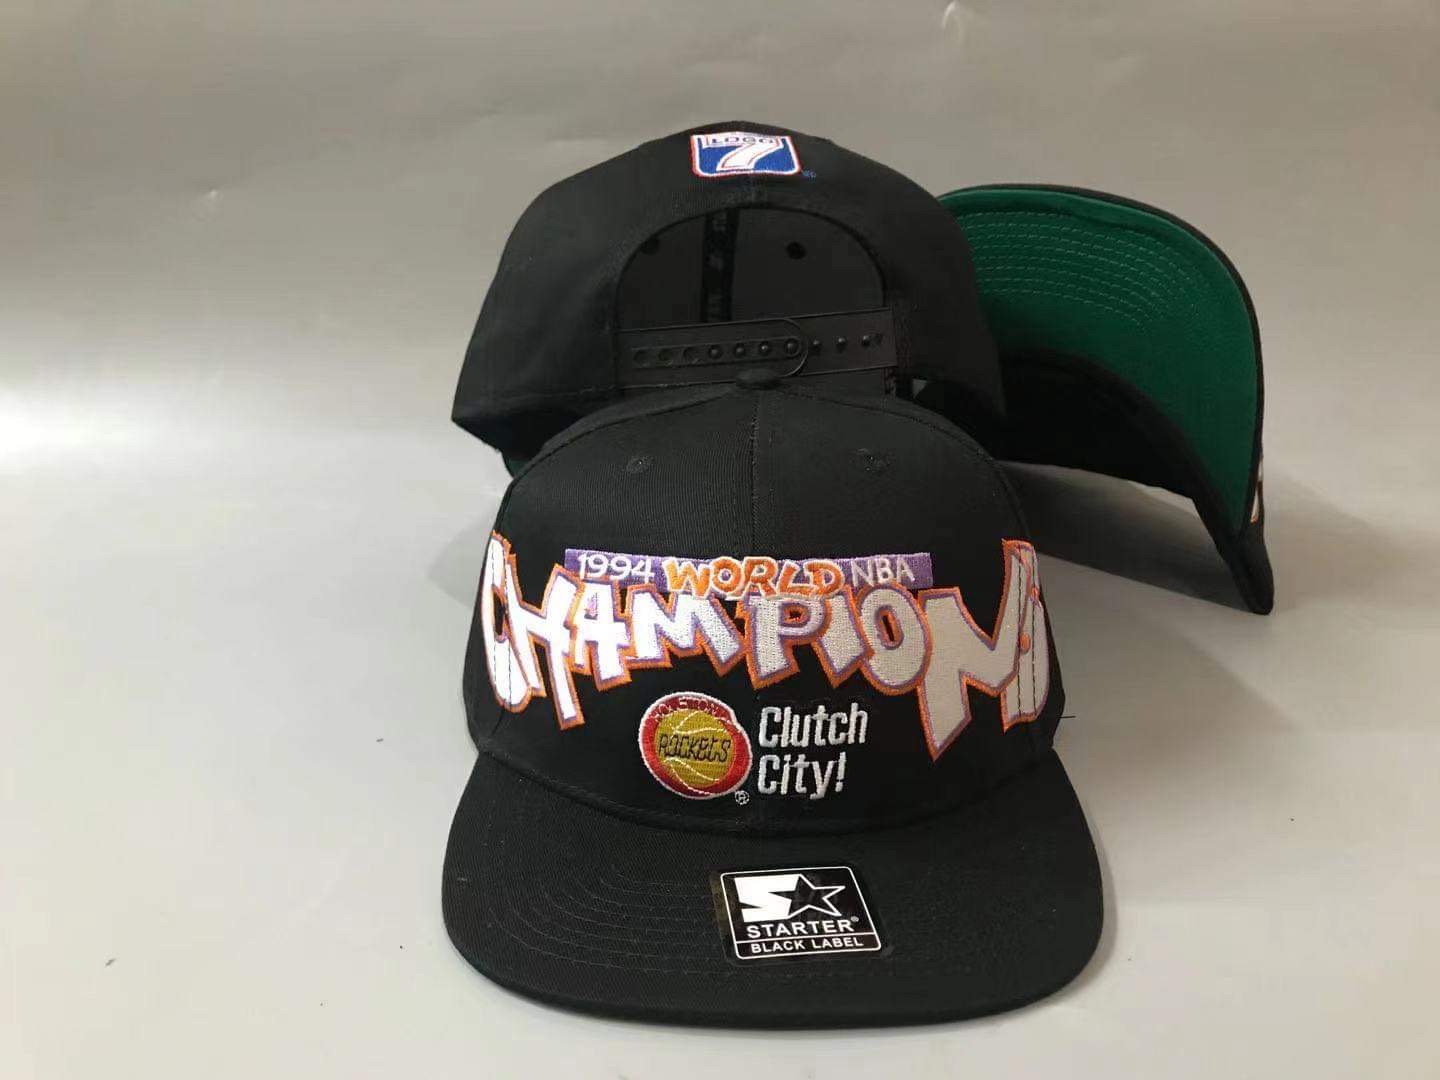 Vintage Starter 1996 Chicago Bulls NBA World Champions Champs Snapback Hat